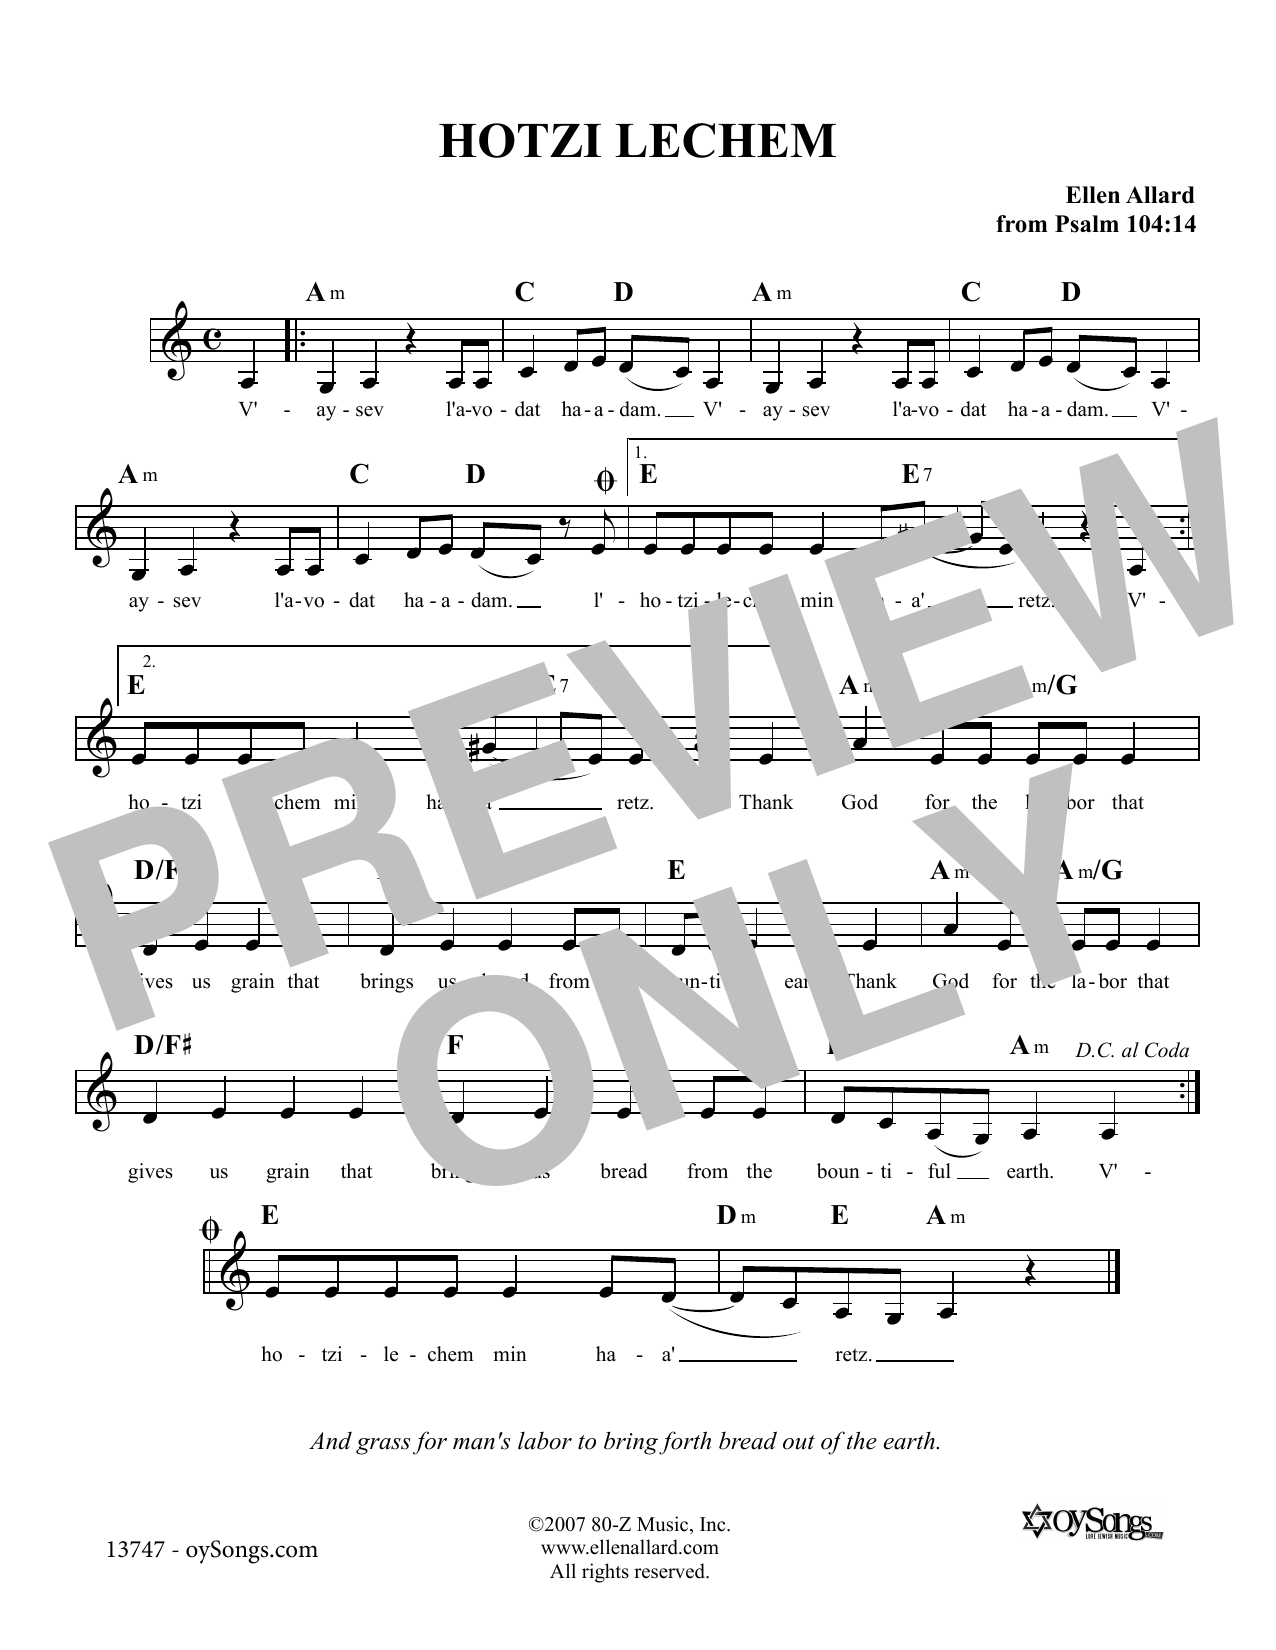 Ellen Allard Hotzi Lechem Sheet Music Notes & Chords for Melody Line, Lyrics & Chords - Download or Print PDF